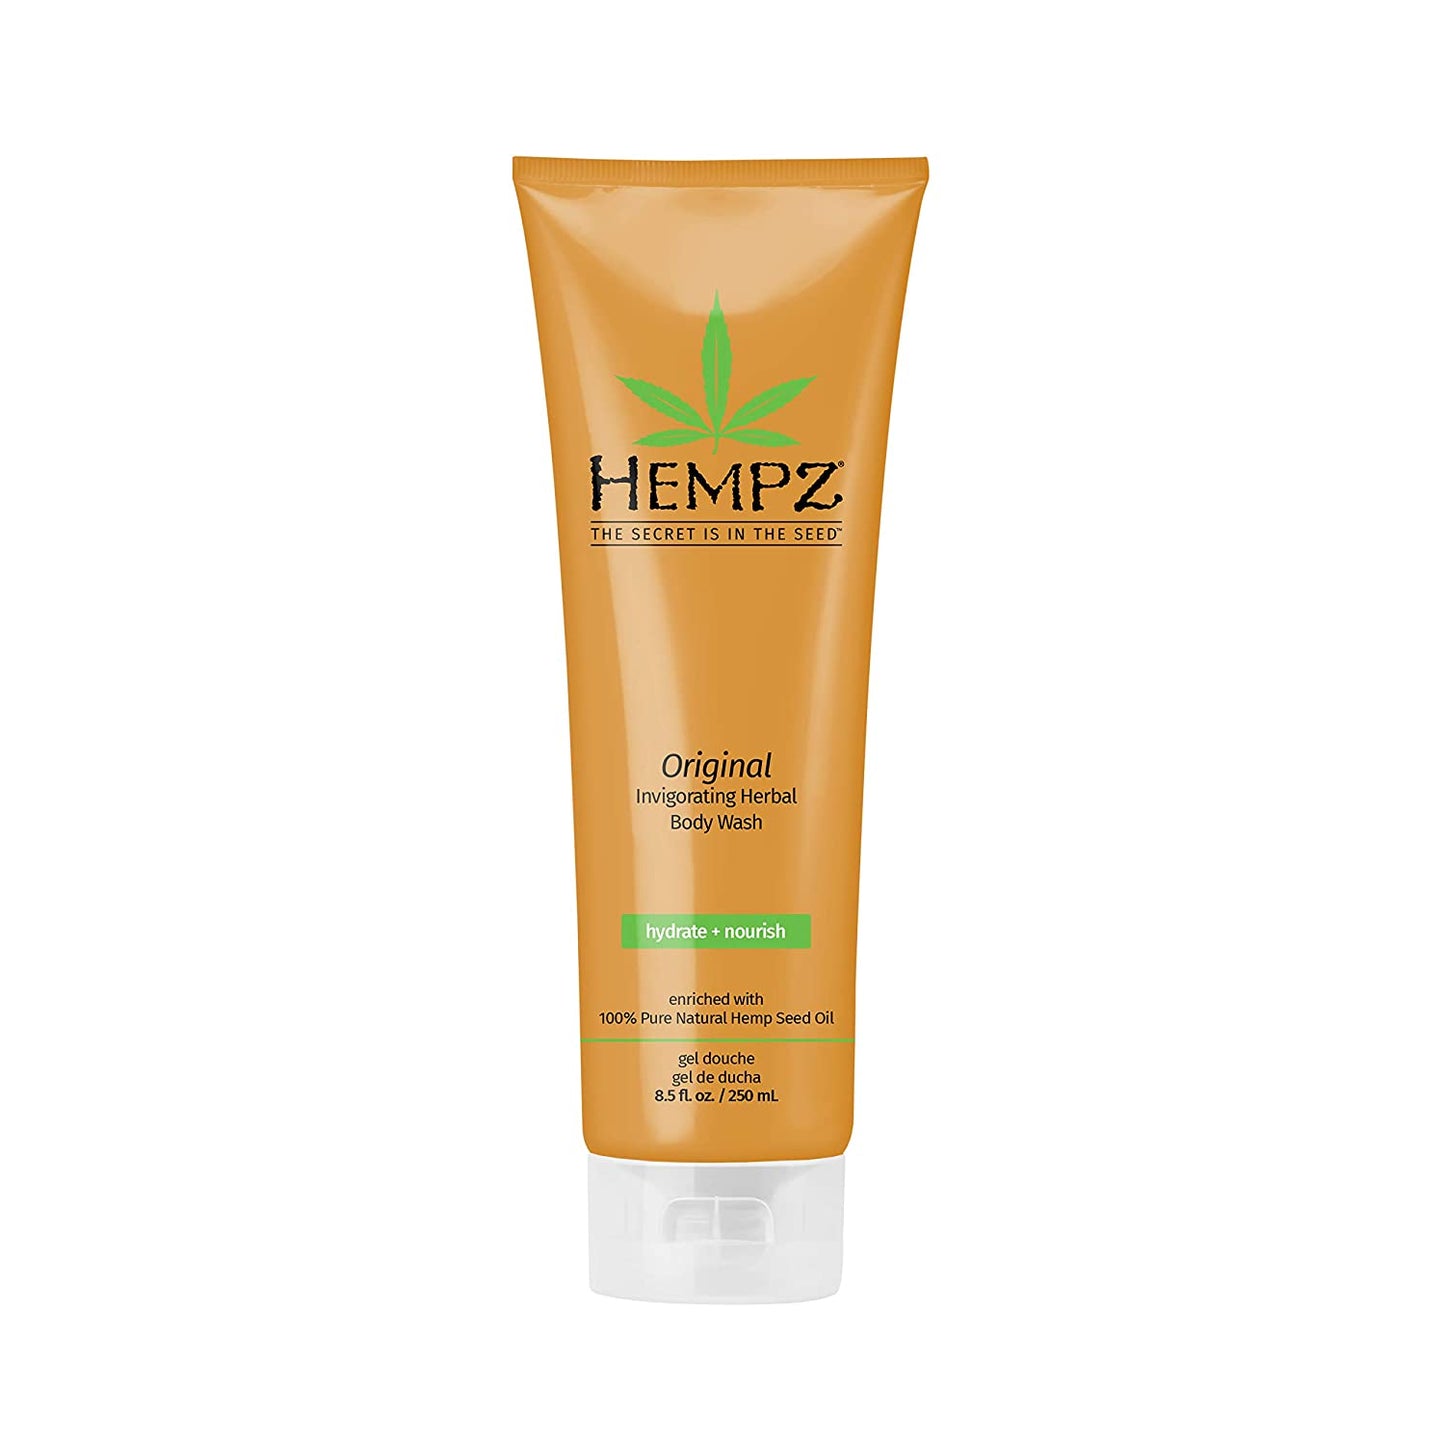 Hempz Original Invigorating Herbal Body Wash, 8.5 Ounce